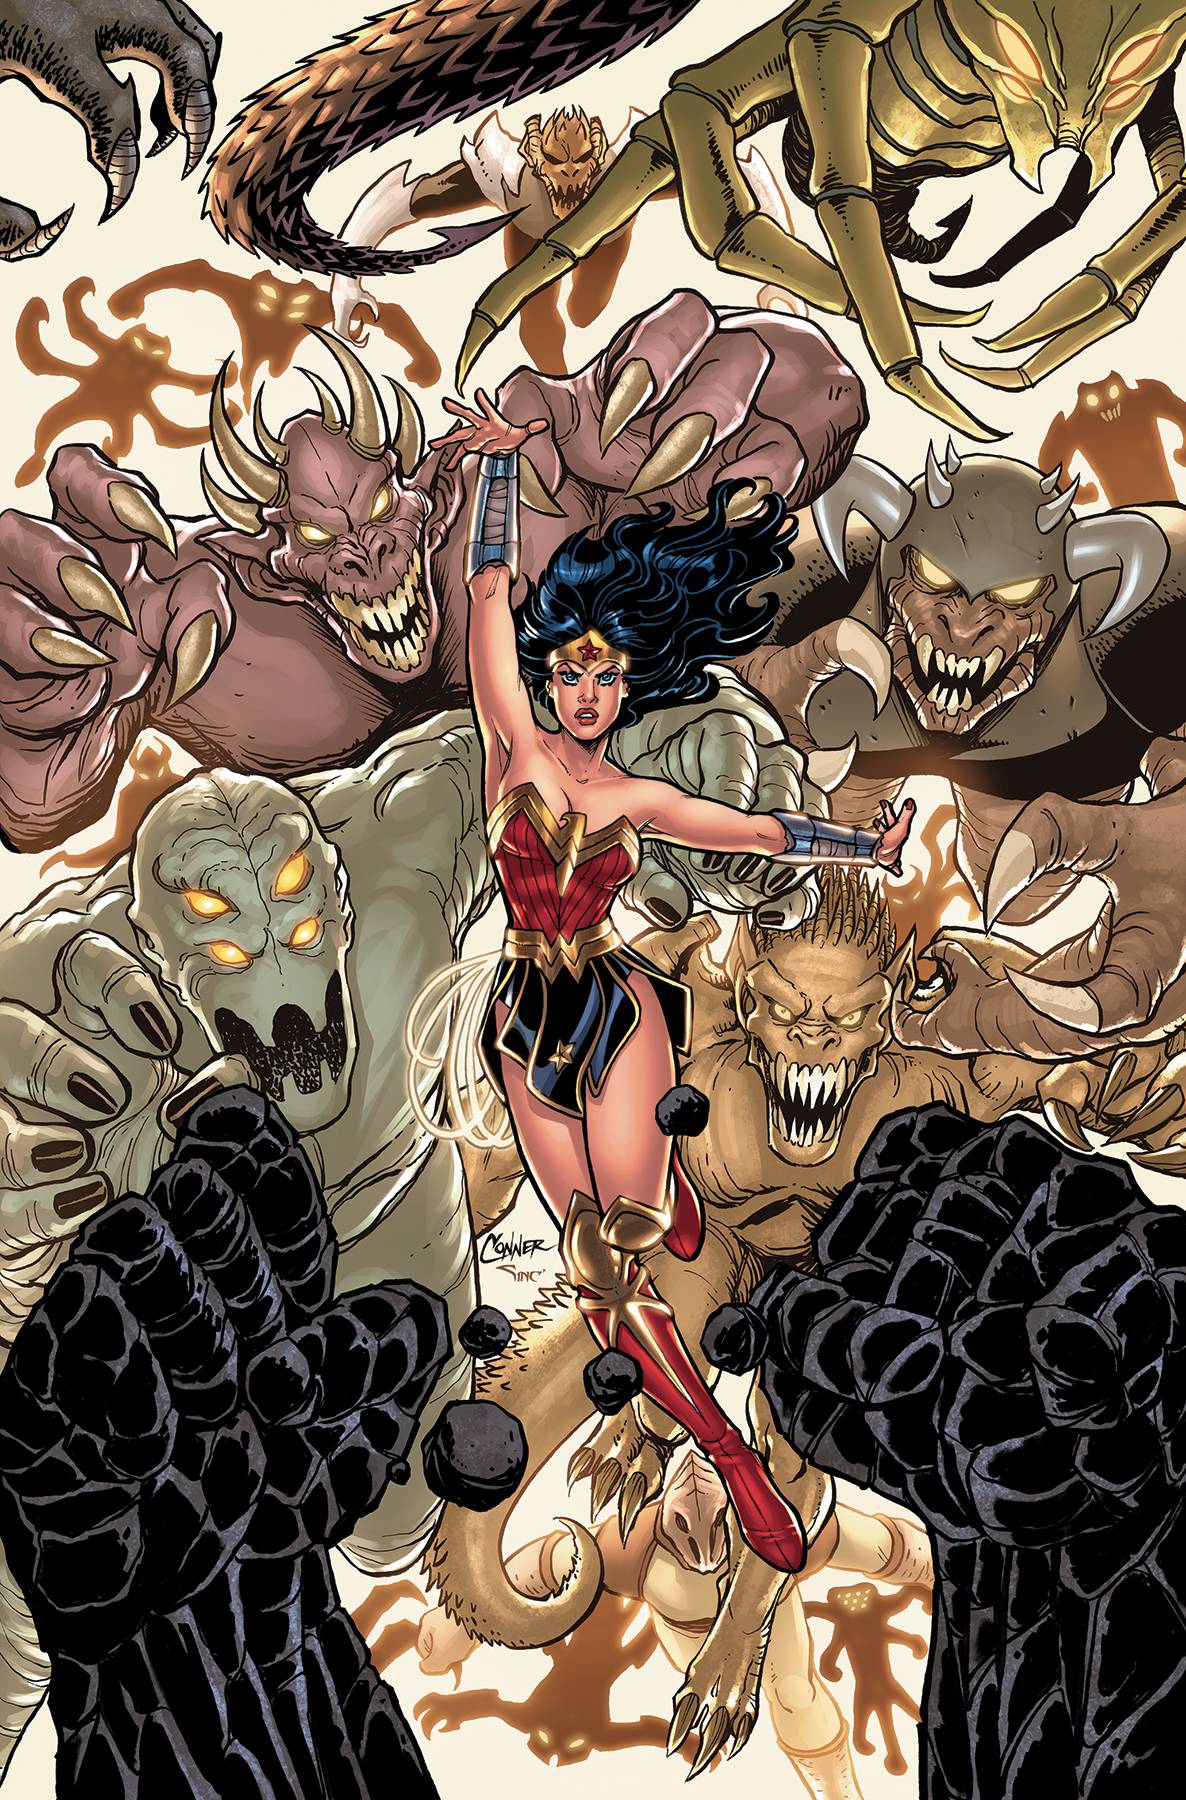 Wonder Woman' is back